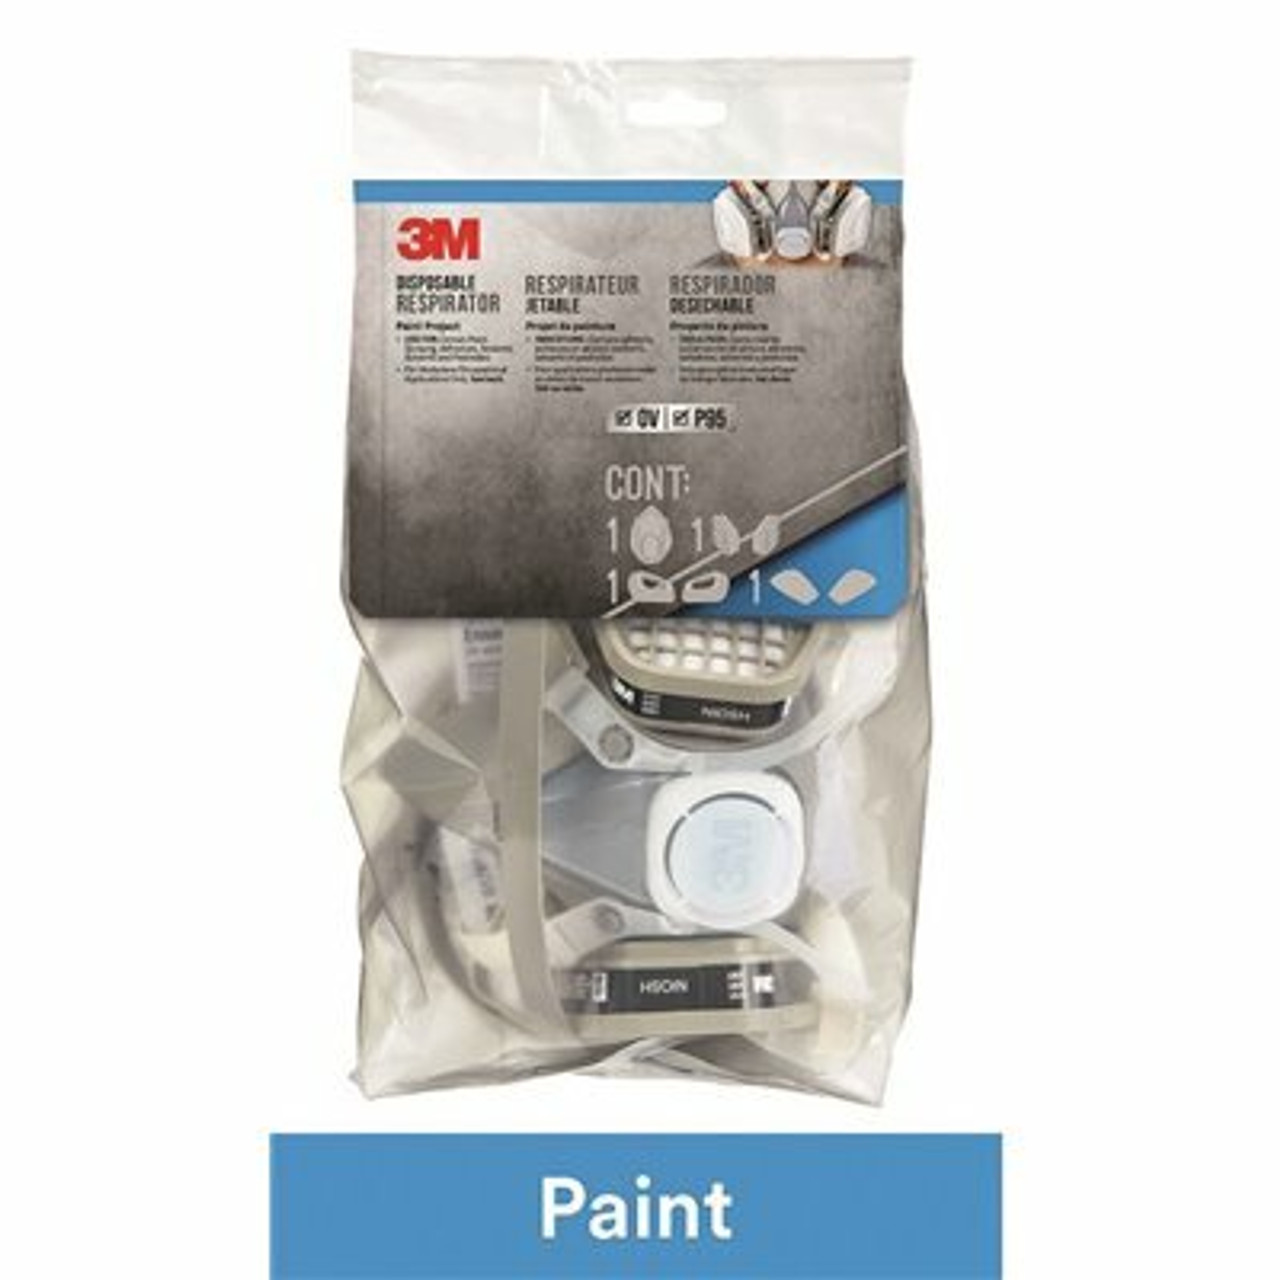 3M Medium Disposable Paint Project Respirator Mask